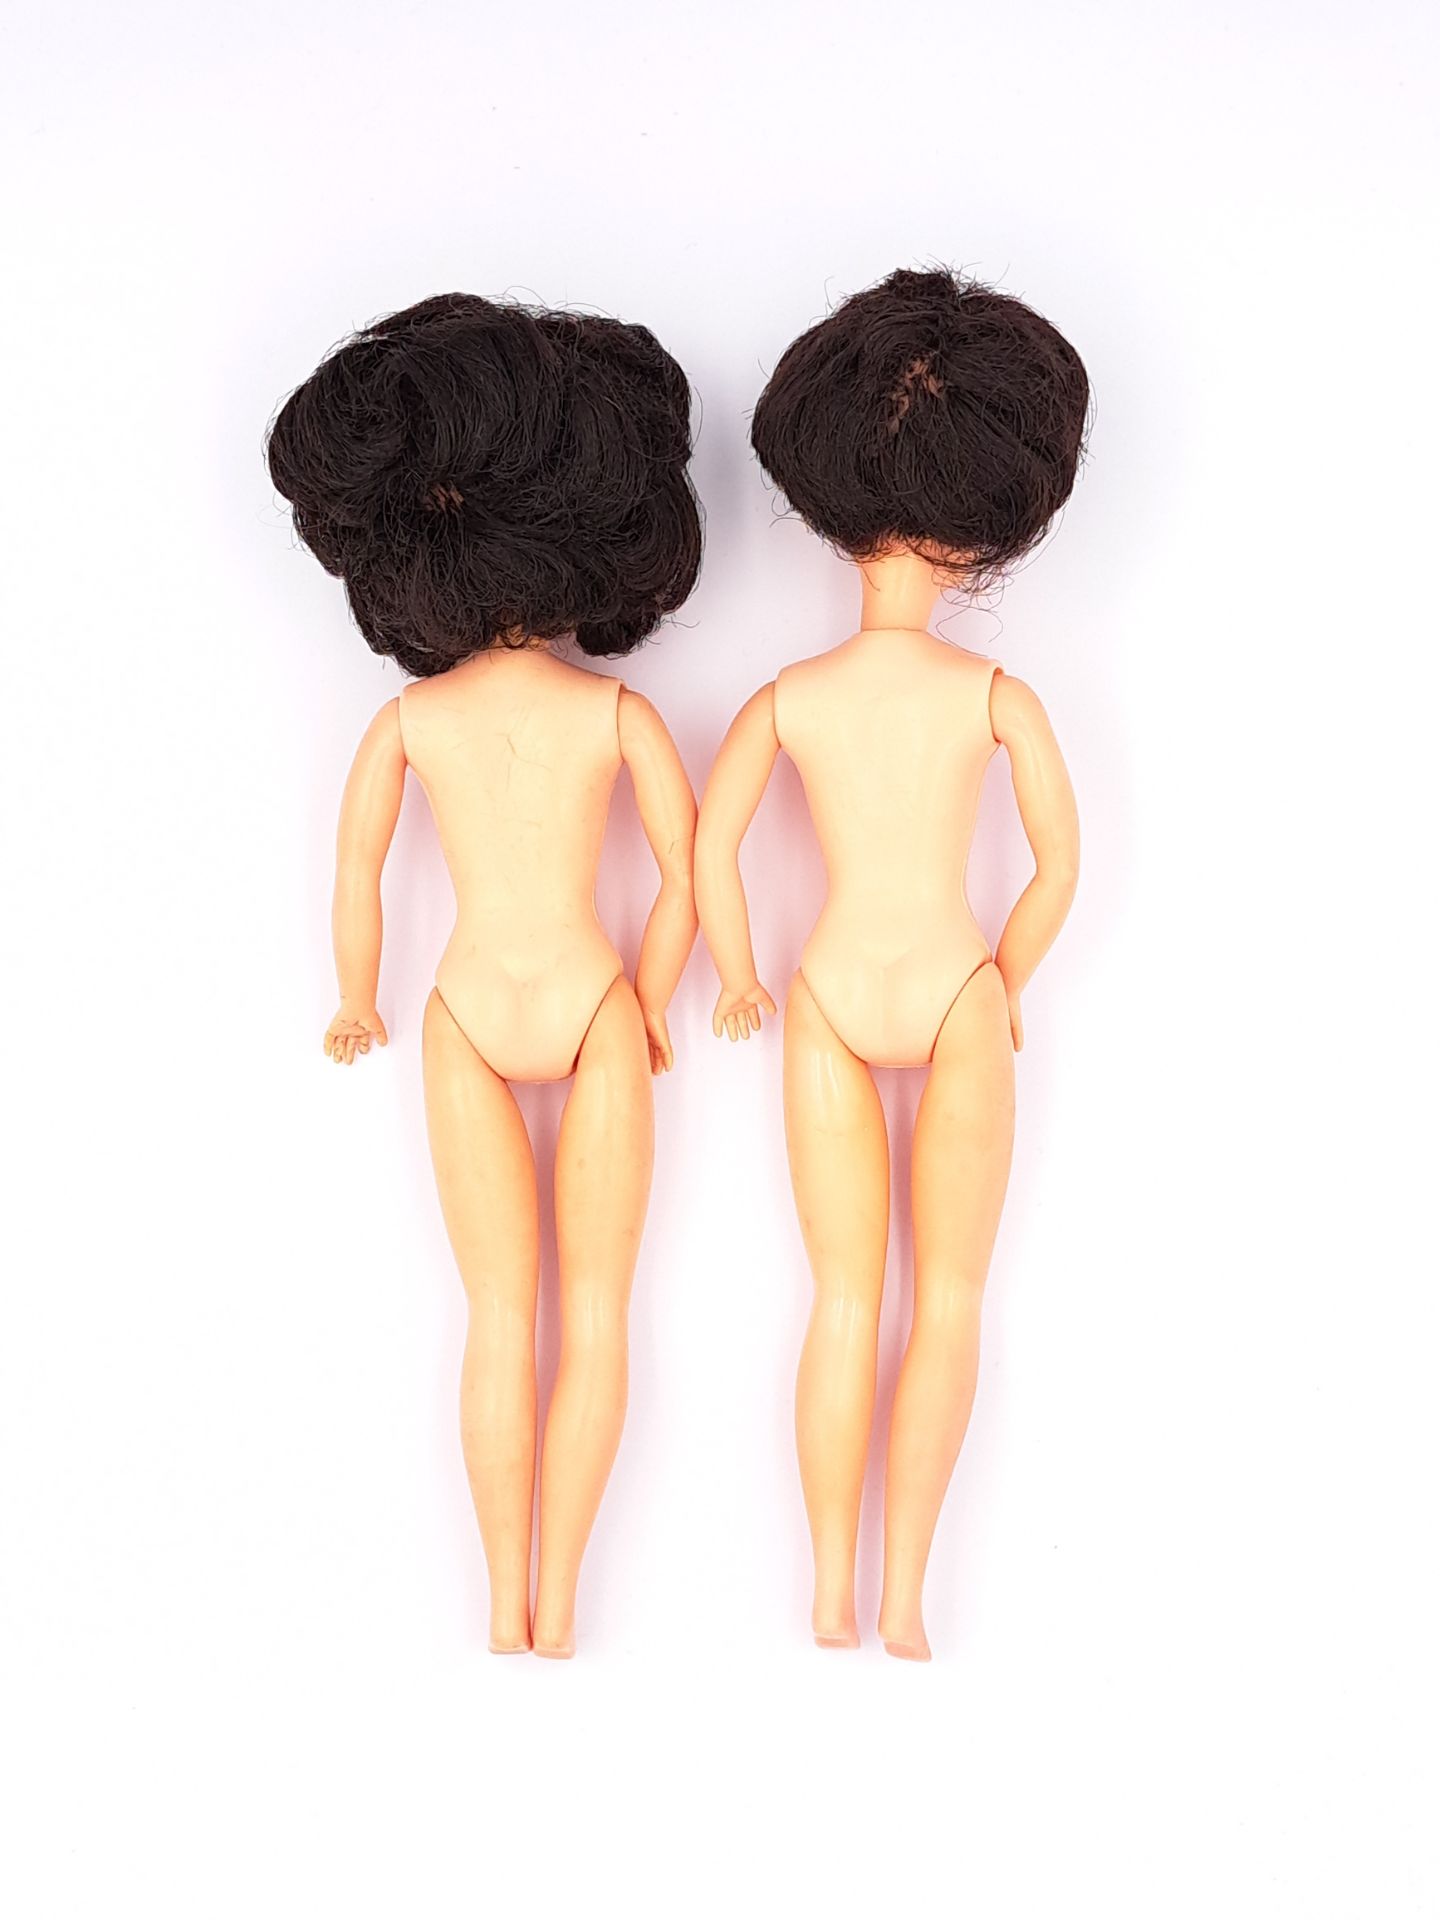 Pedigree mini Sindy pair of vintage brunette dolls, 1966 - Image 4 of 4